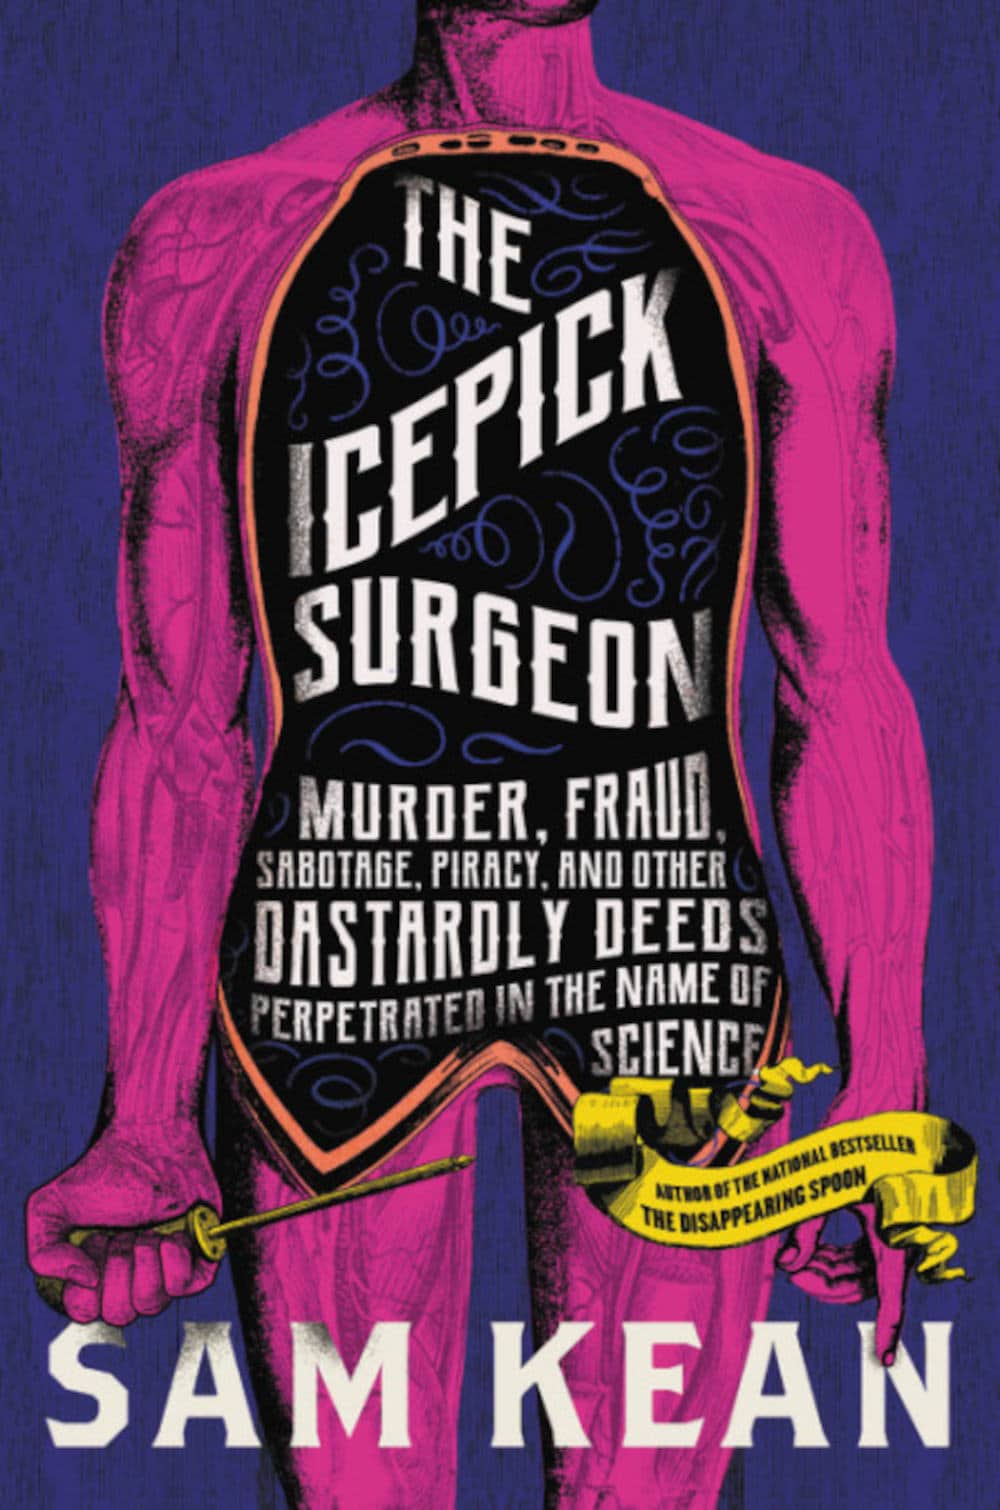 icepick-surgeon-1000.jpg